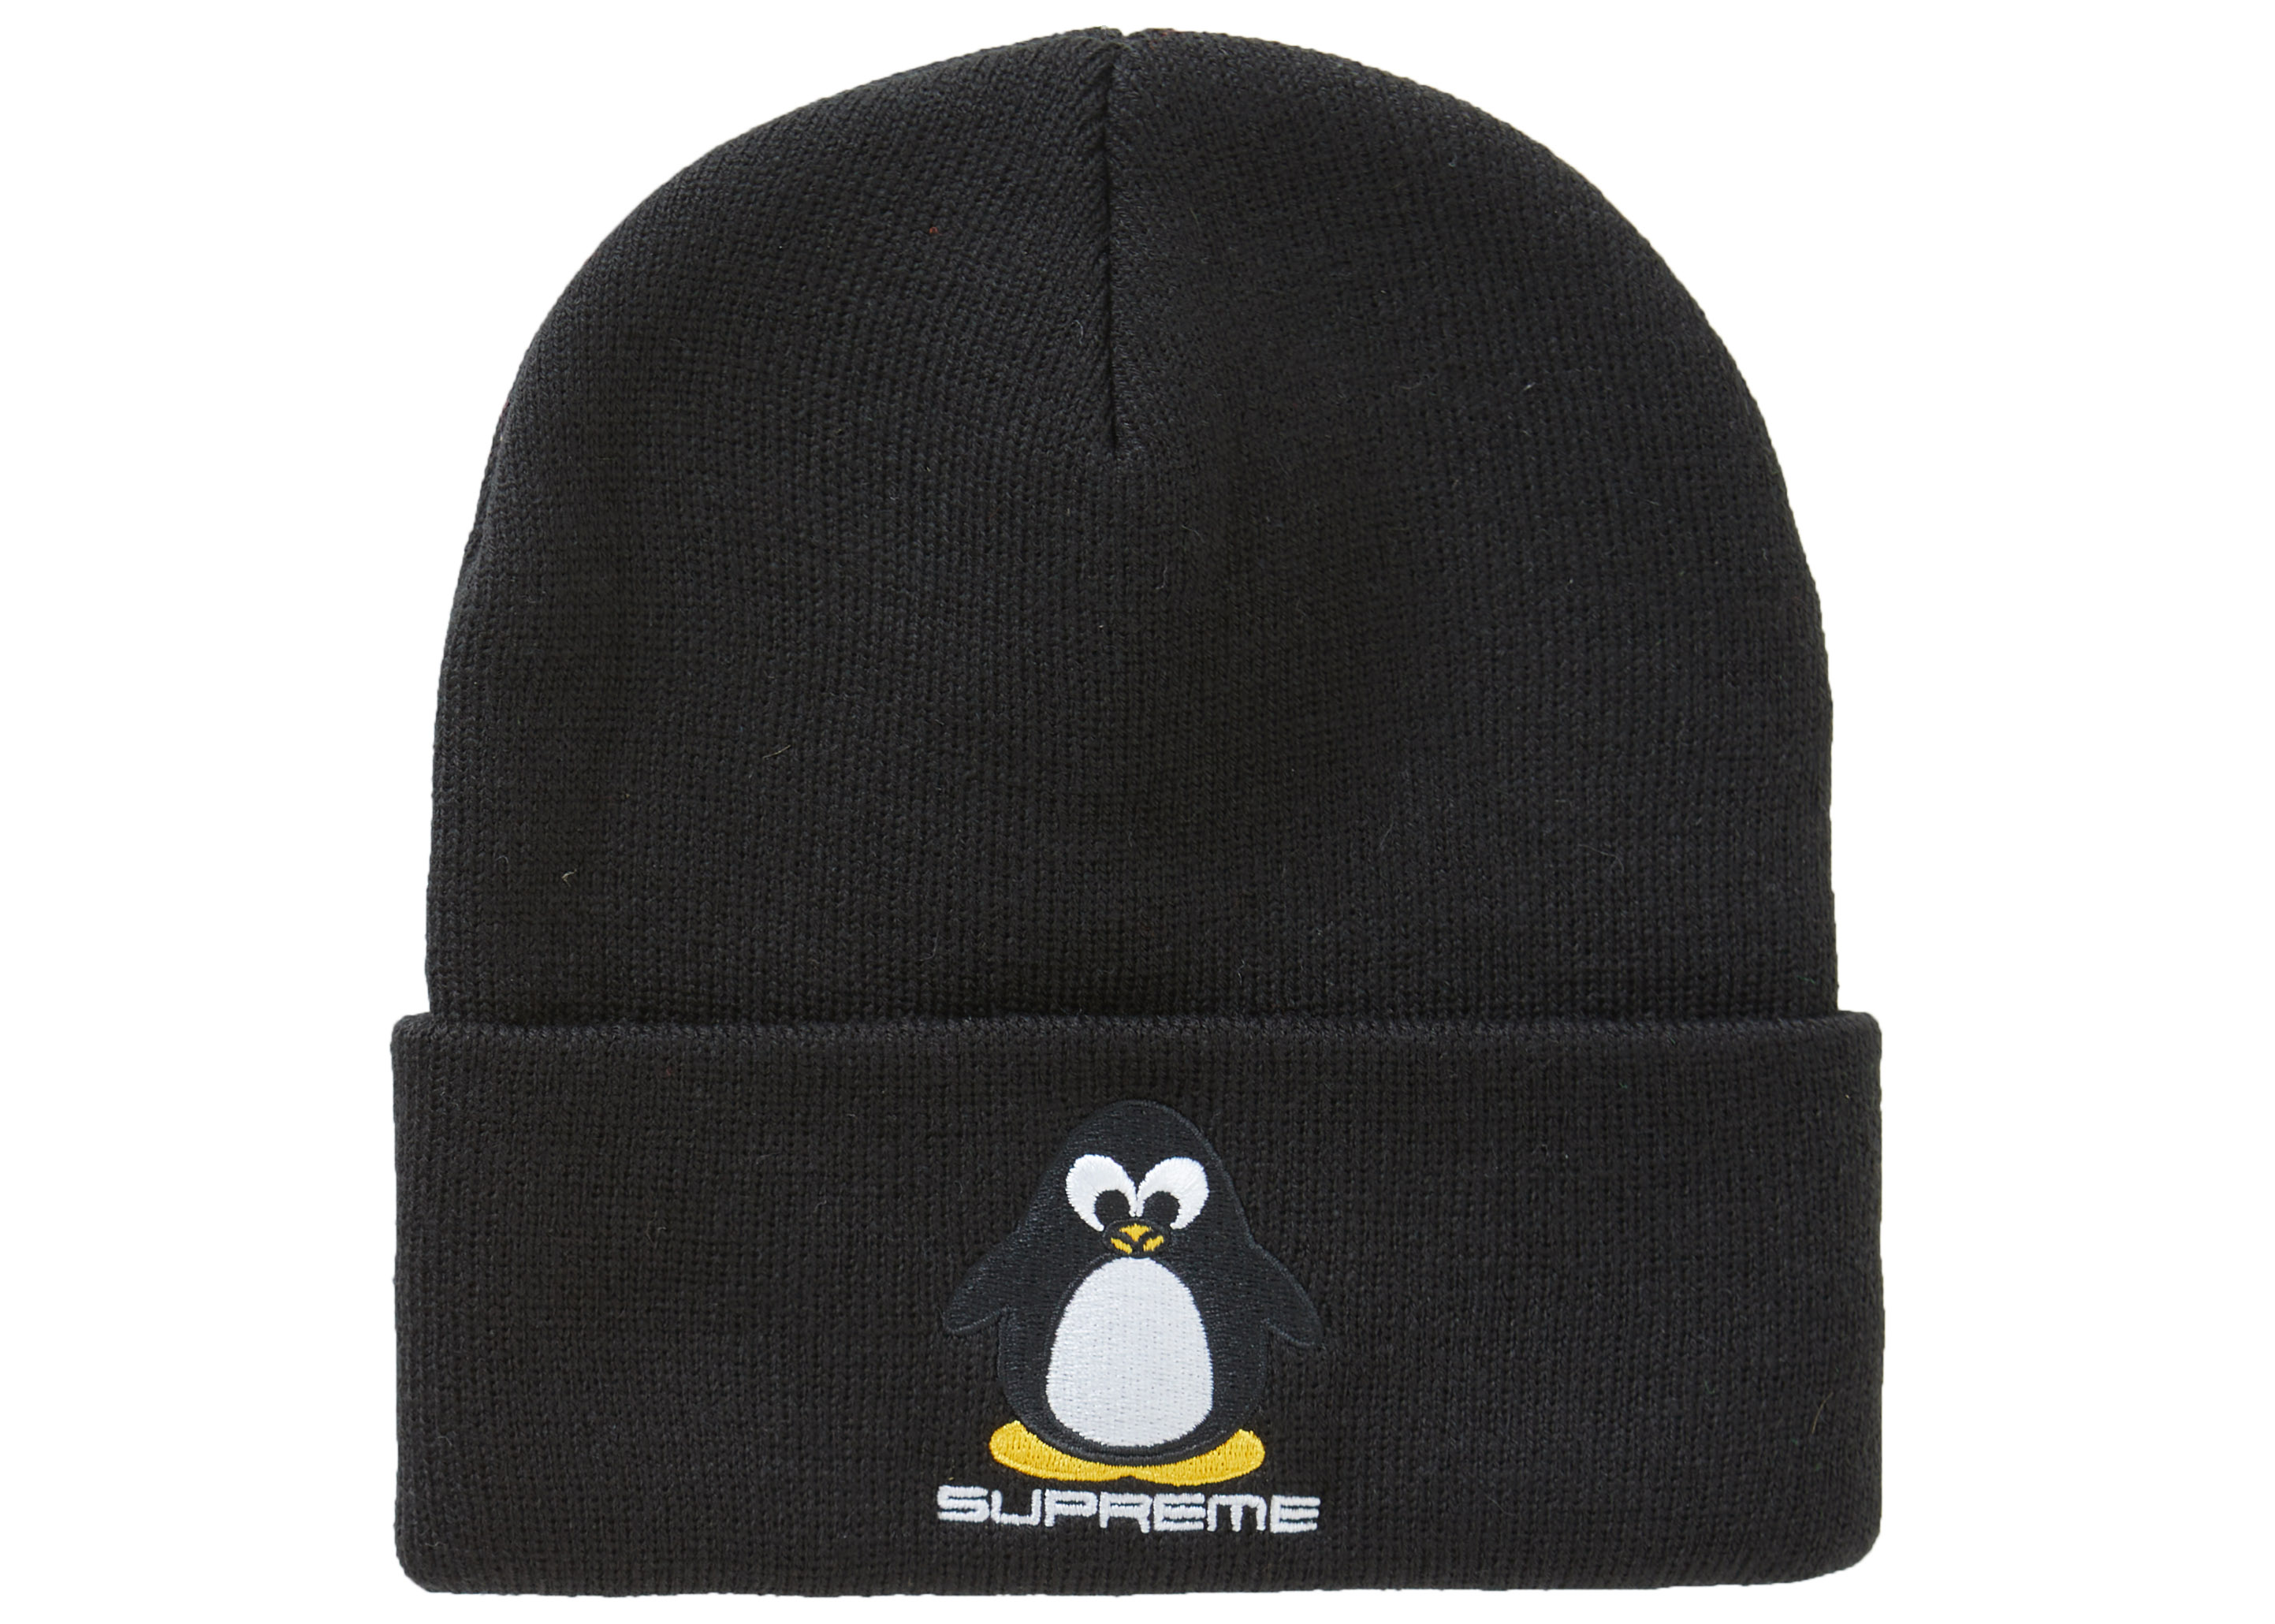 supremeSuprerme ニット帽 penguin beanie black